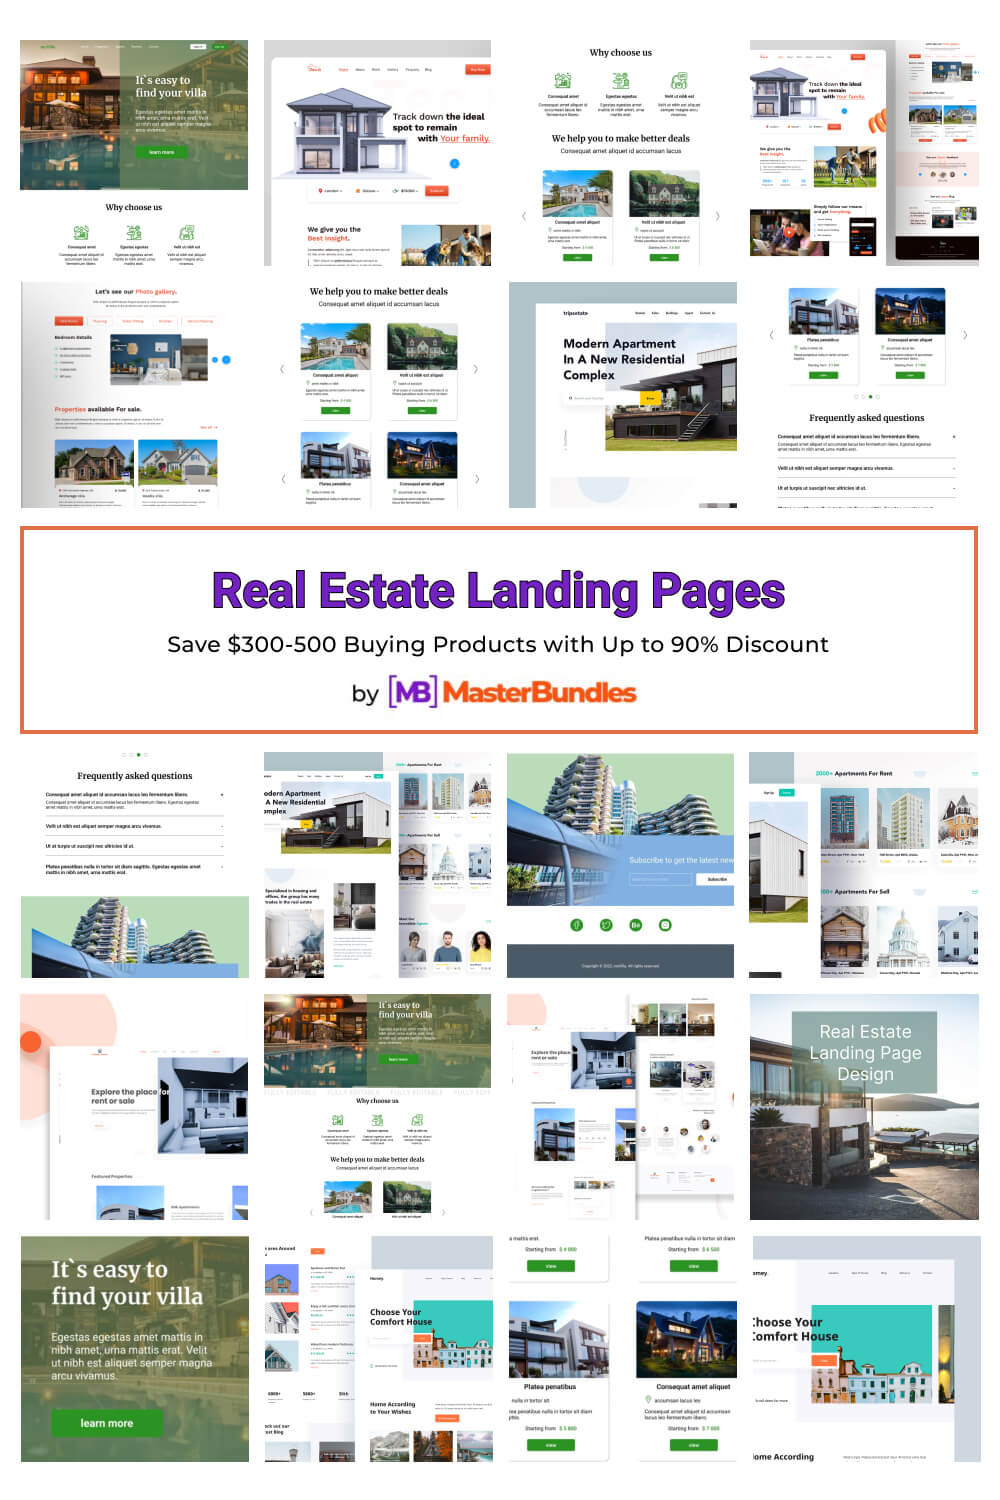 real estate landing pages pinterest image.